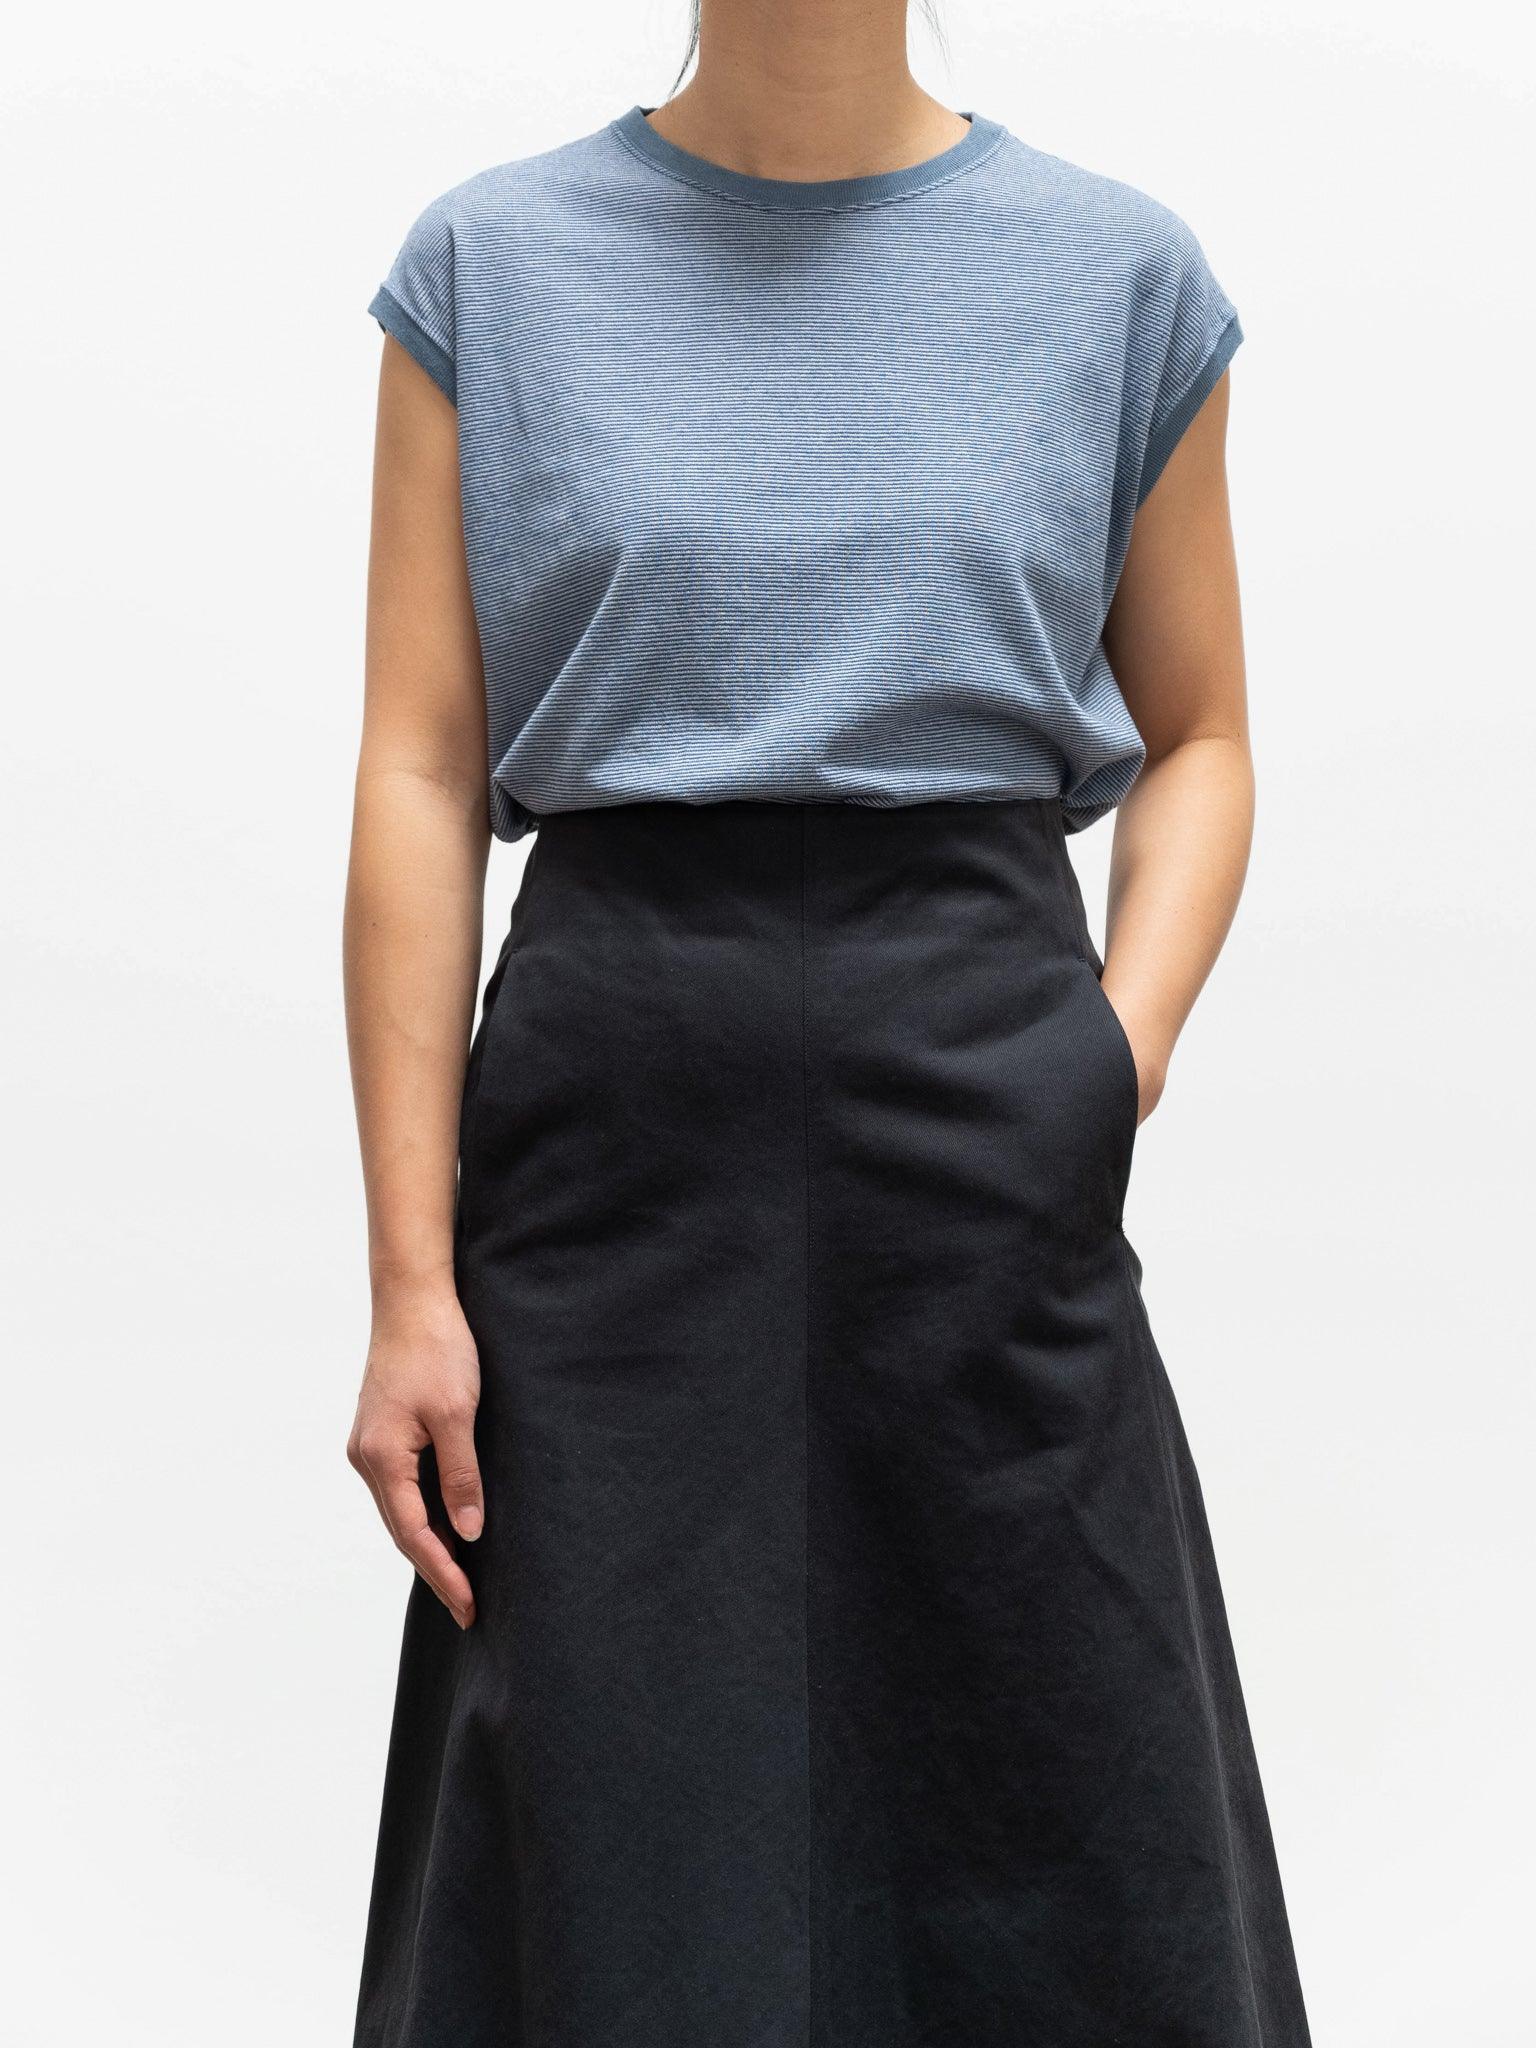 Namu Shop - Yleve Finx Cotton Chino Flare Skirt - Navy